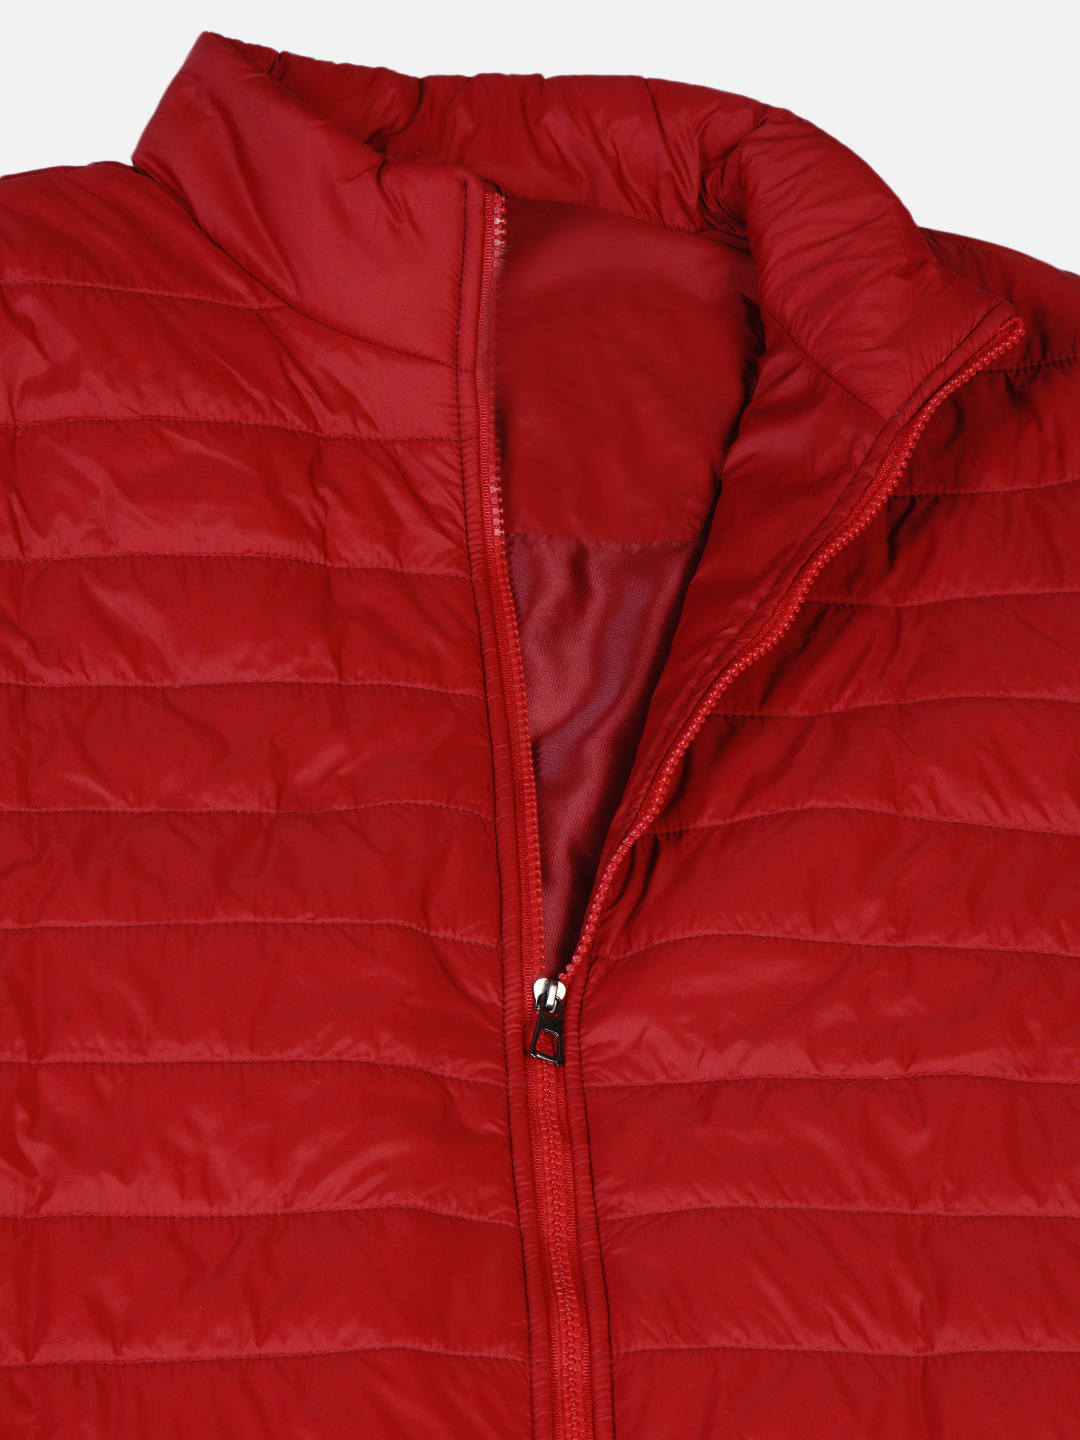 winterwear/jackets/JPJKT73012C/jpjkt73012c-2.jpg